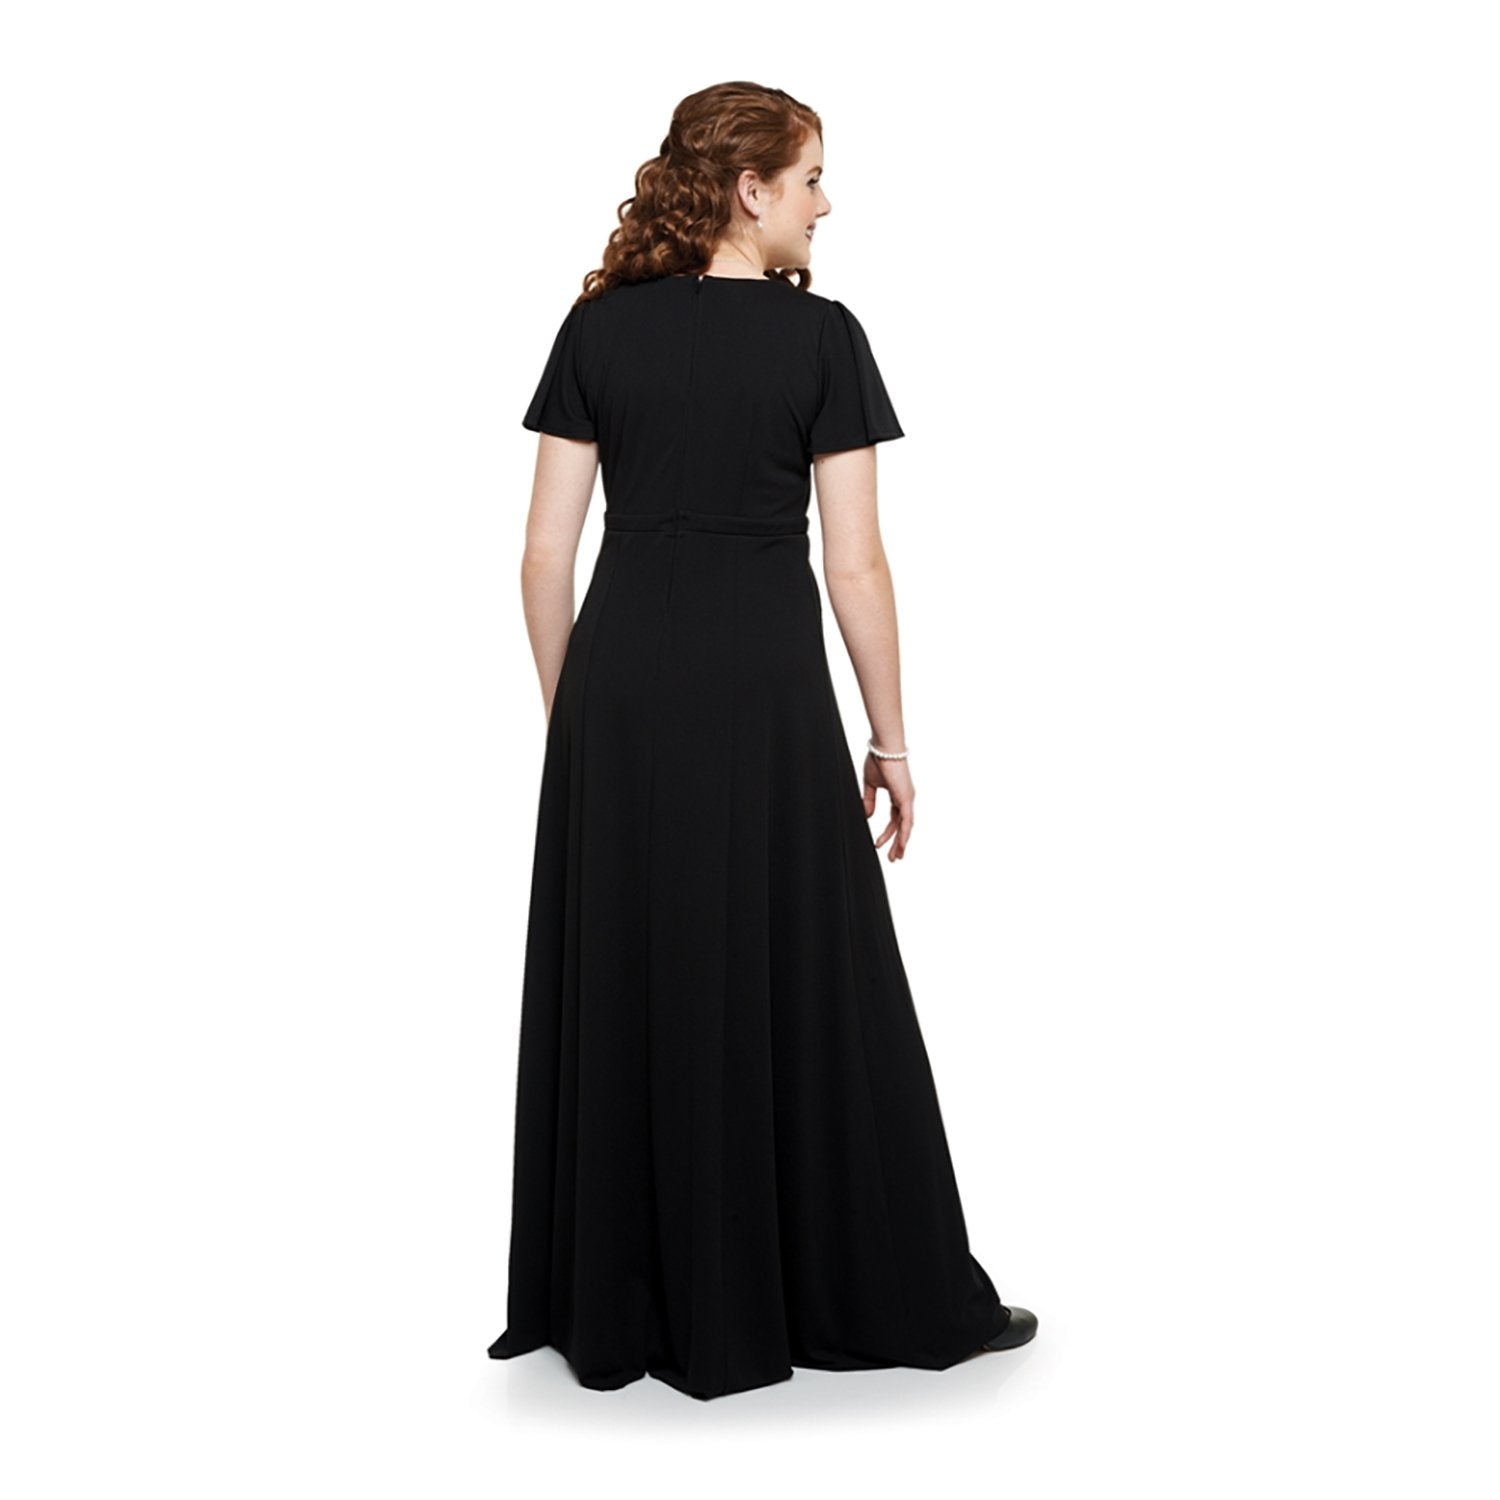 Strapless Empire Waist Dress - Black Bali Twist | NOVICA